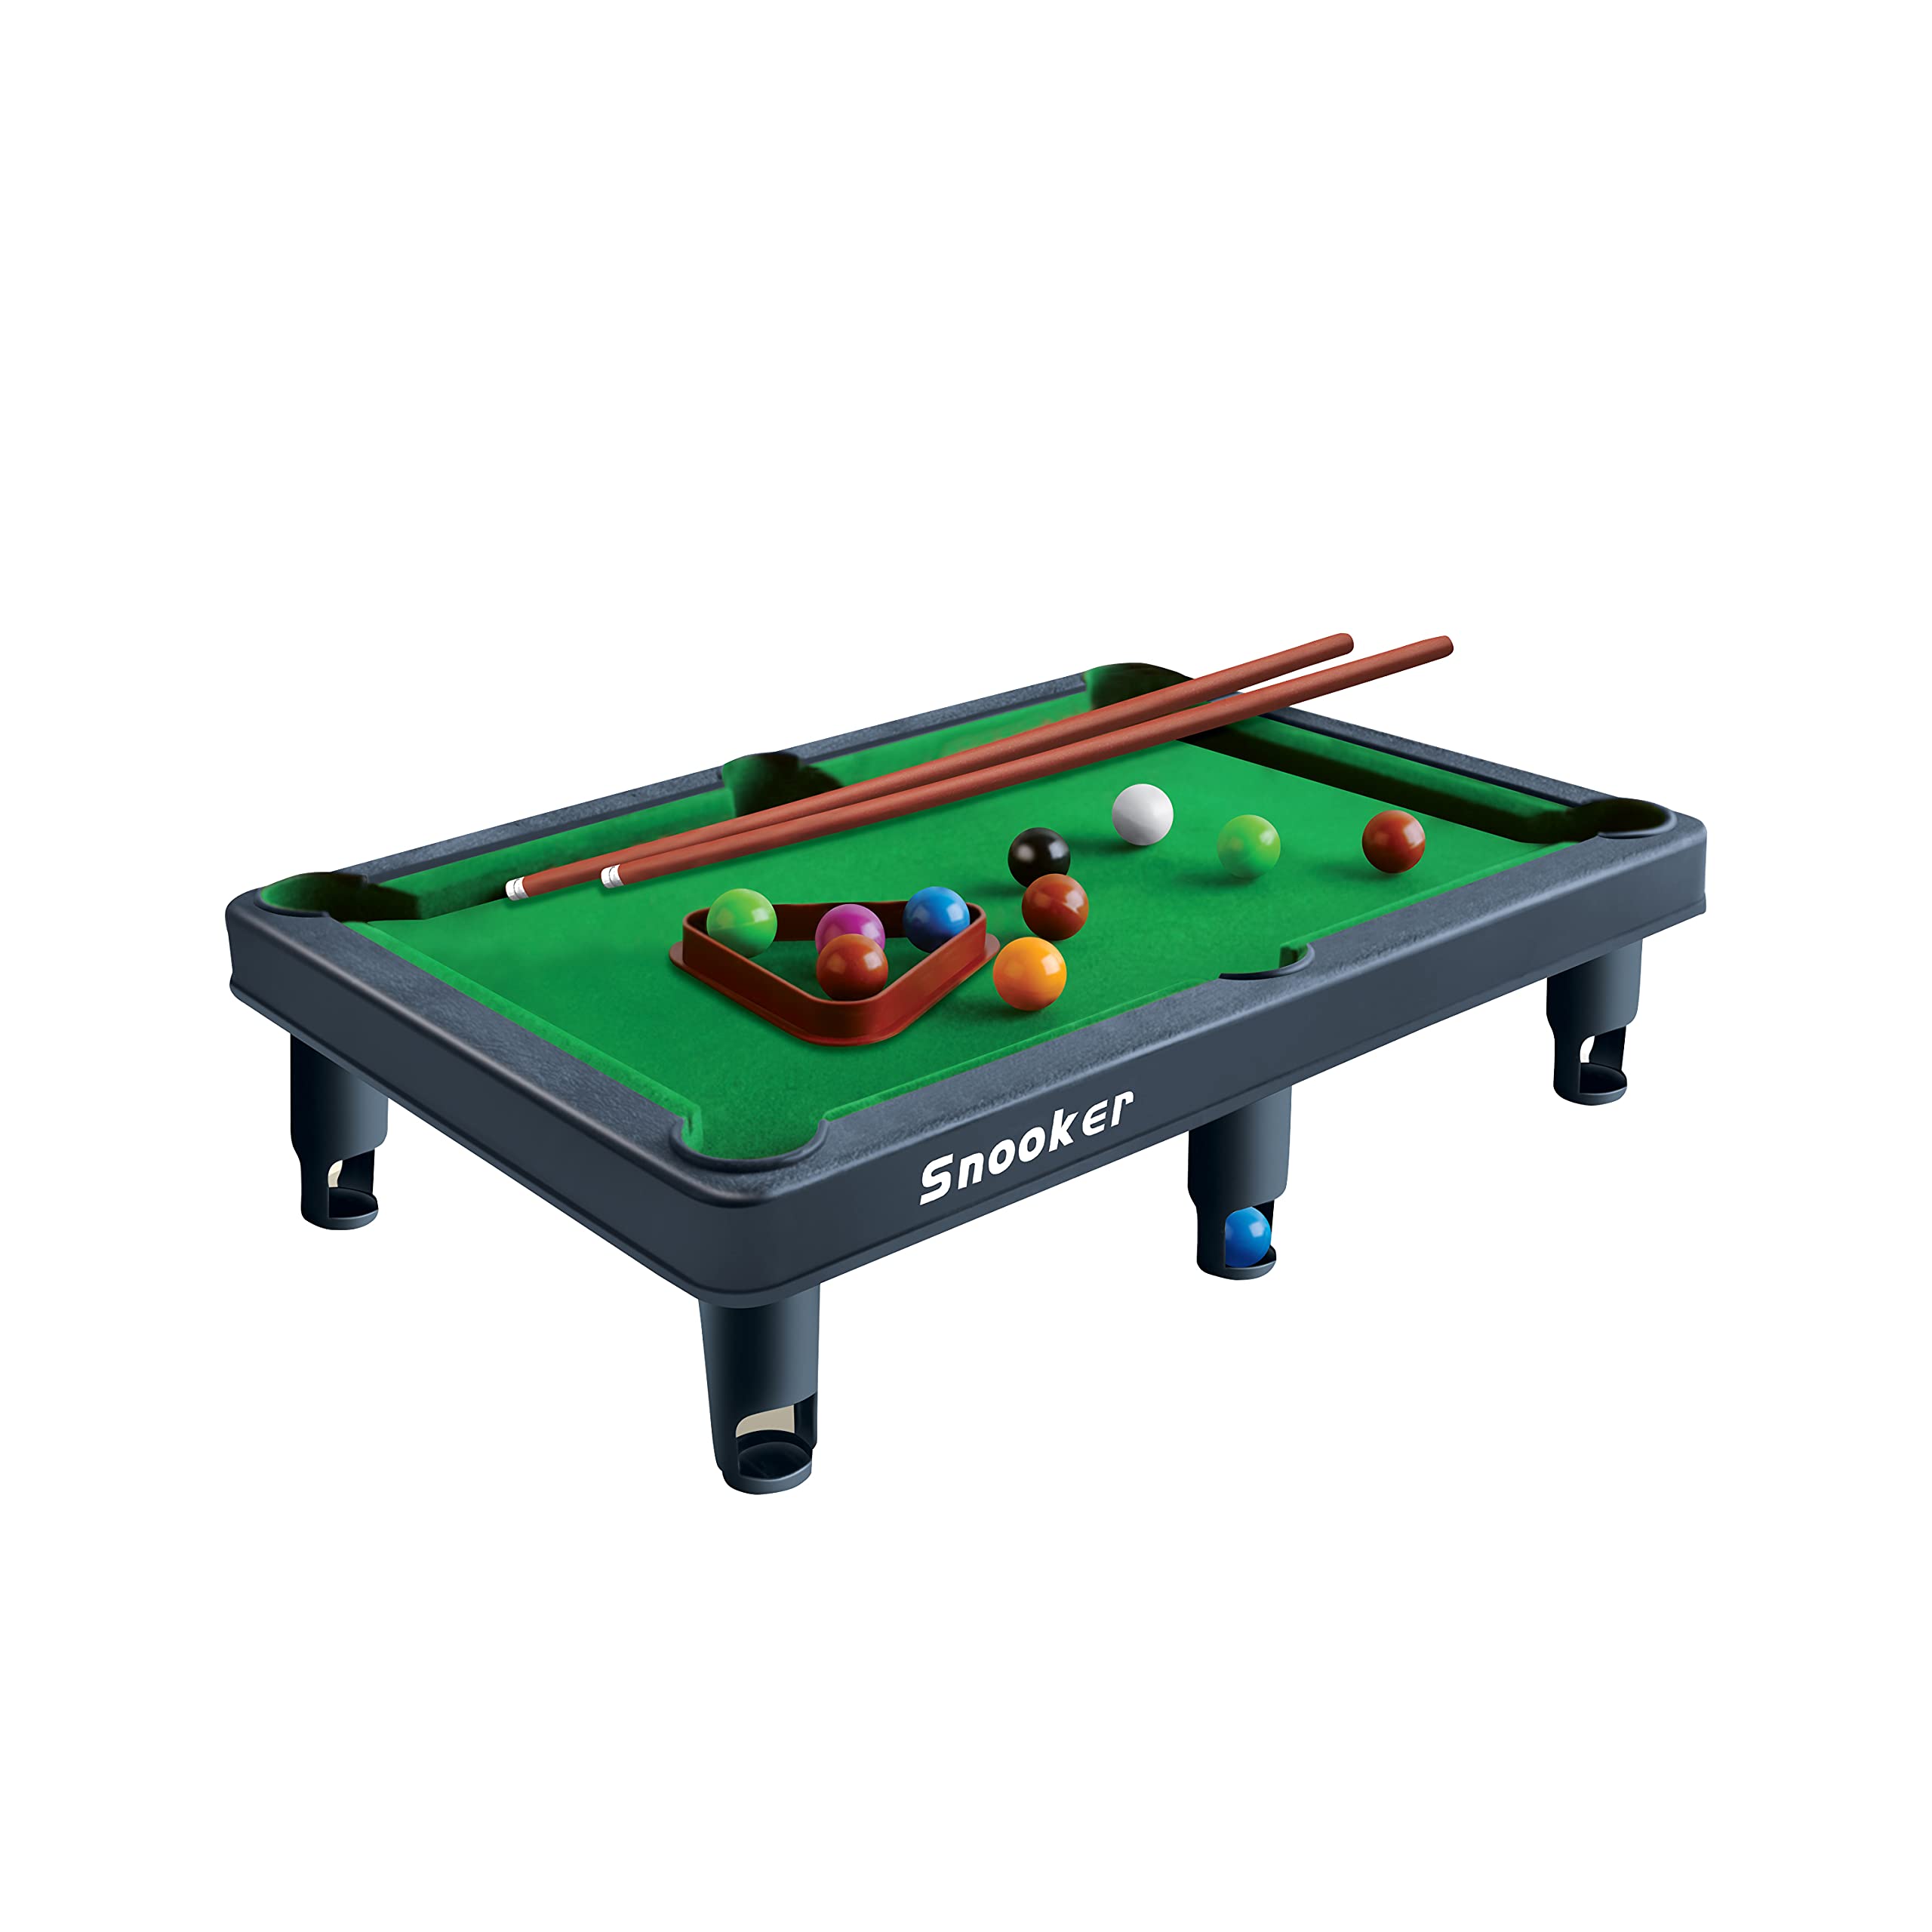 PlayAmaze Snooker Table Tennis Game